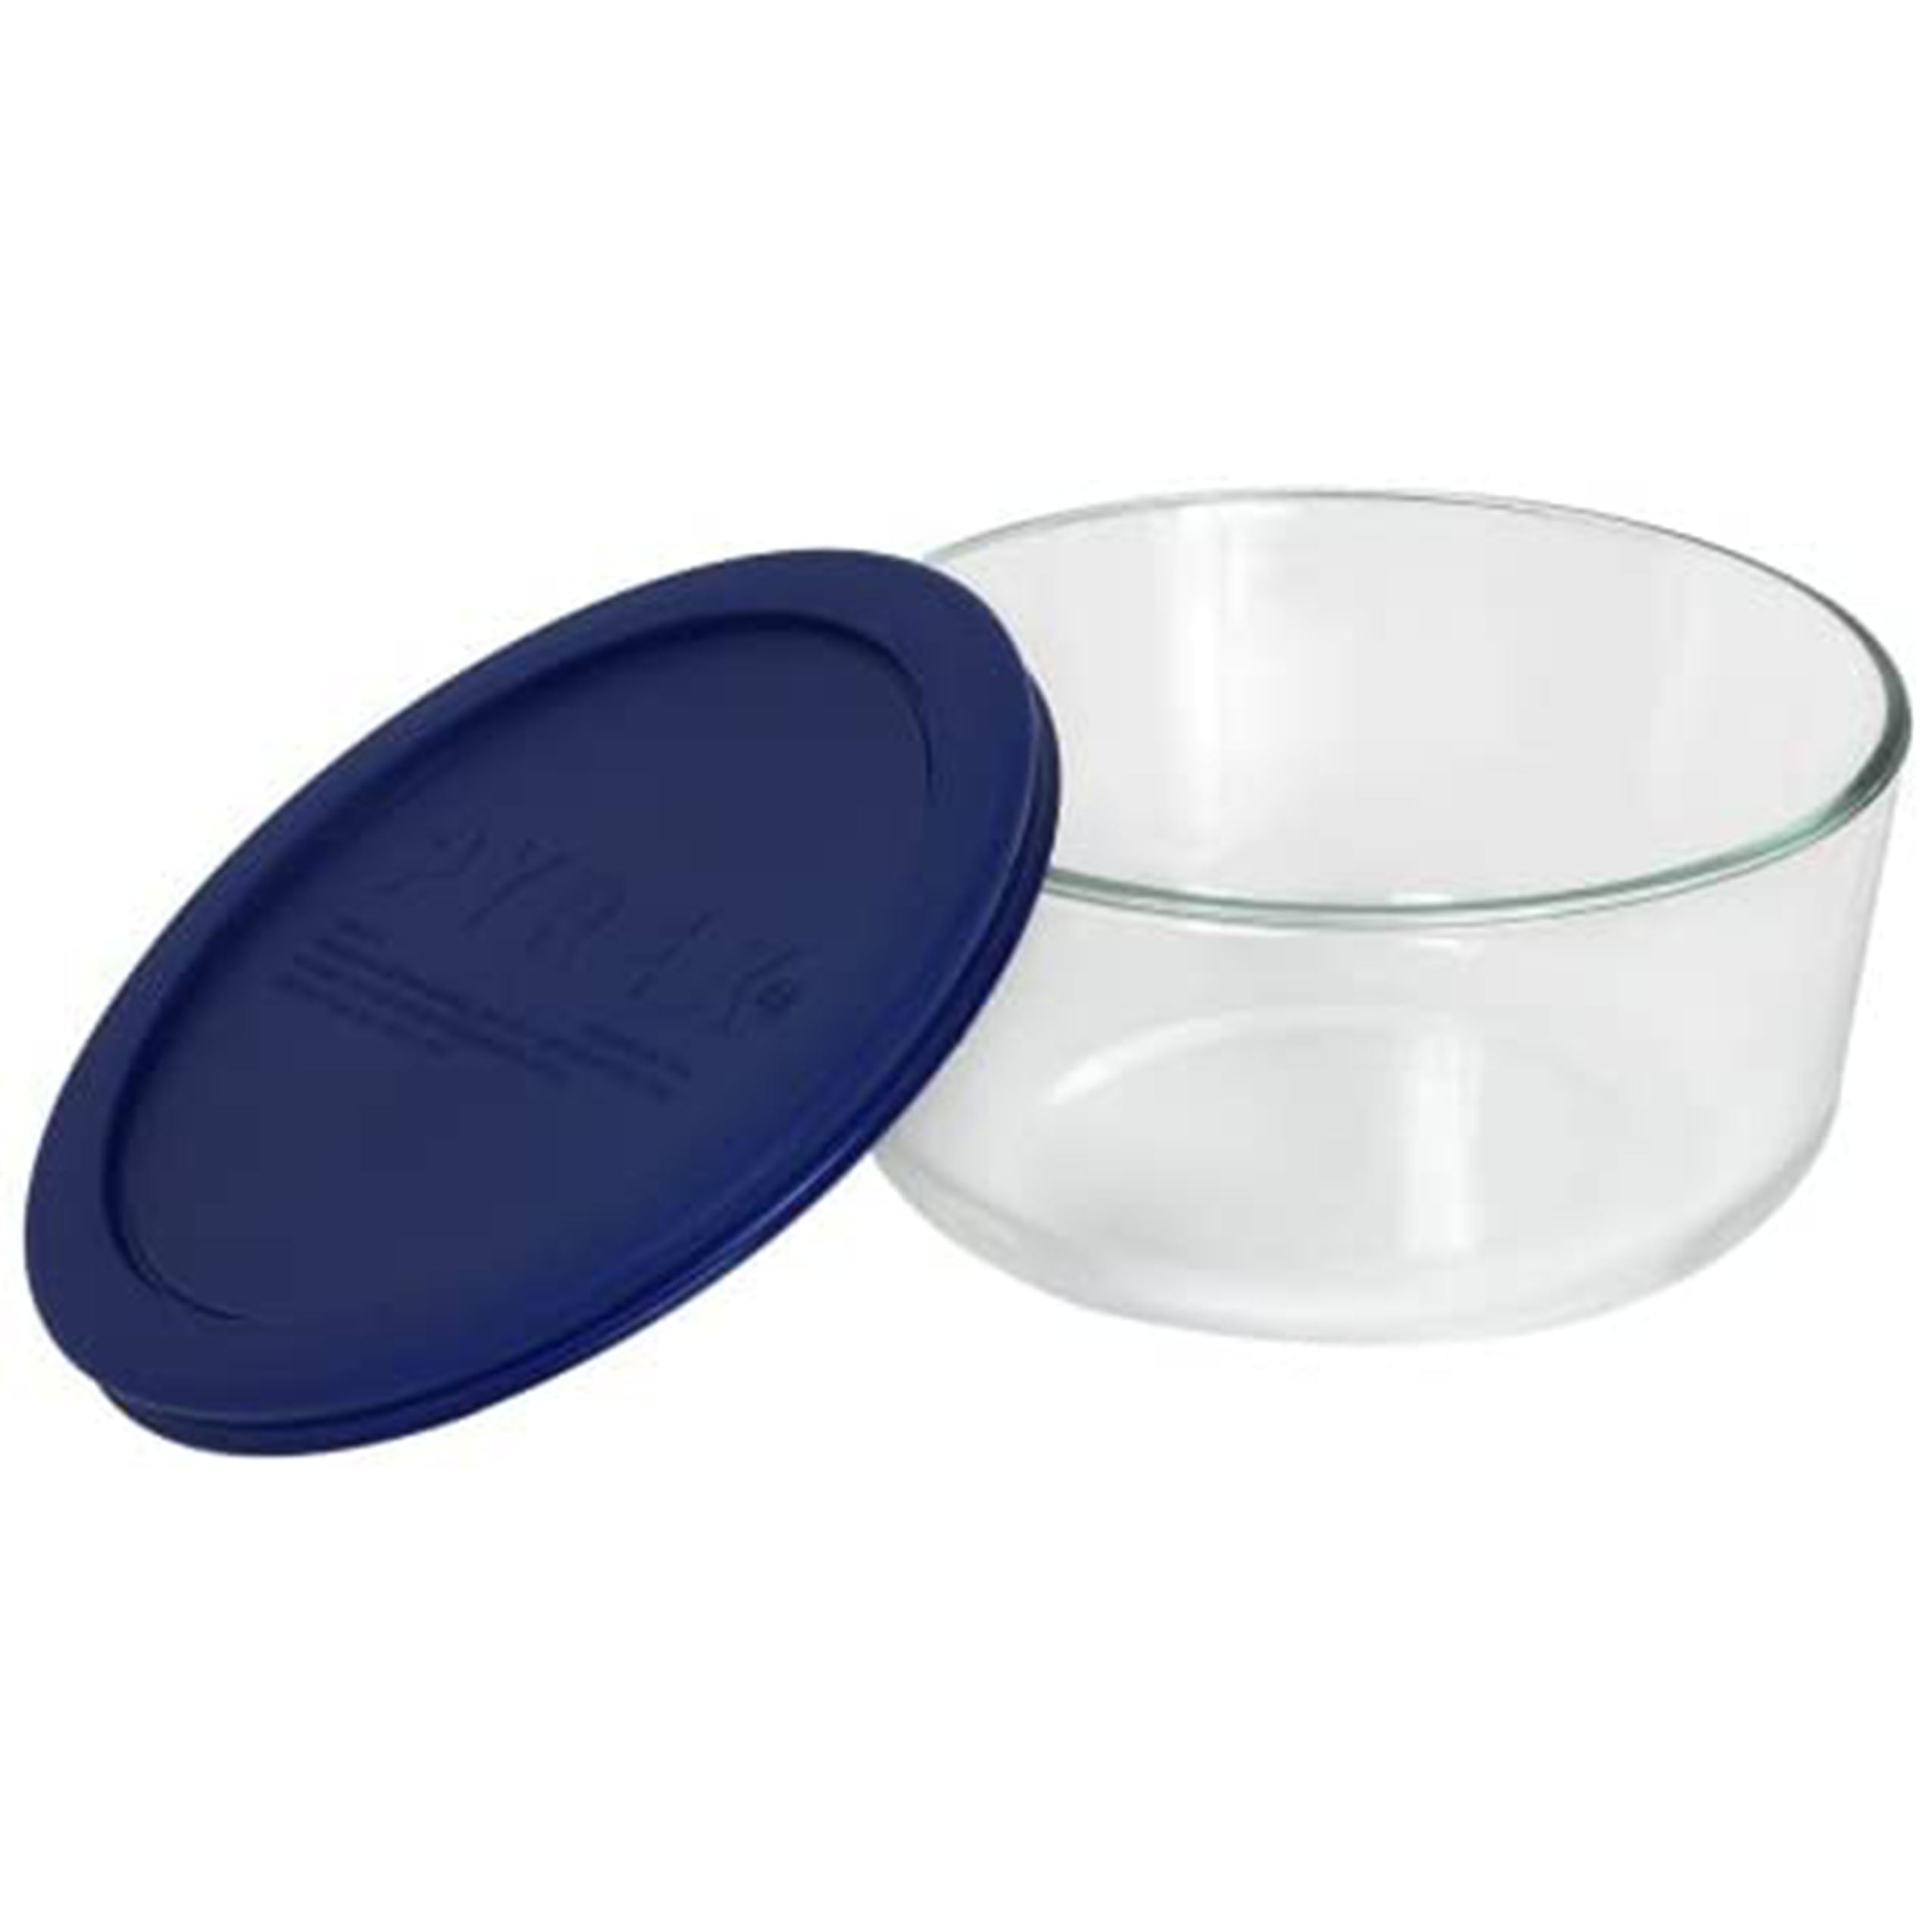 Pyrex 7201 4-Cup Glass Food Storage Bowl w/ 7201-PC Blue Cornflower Lid  (2-Pack)